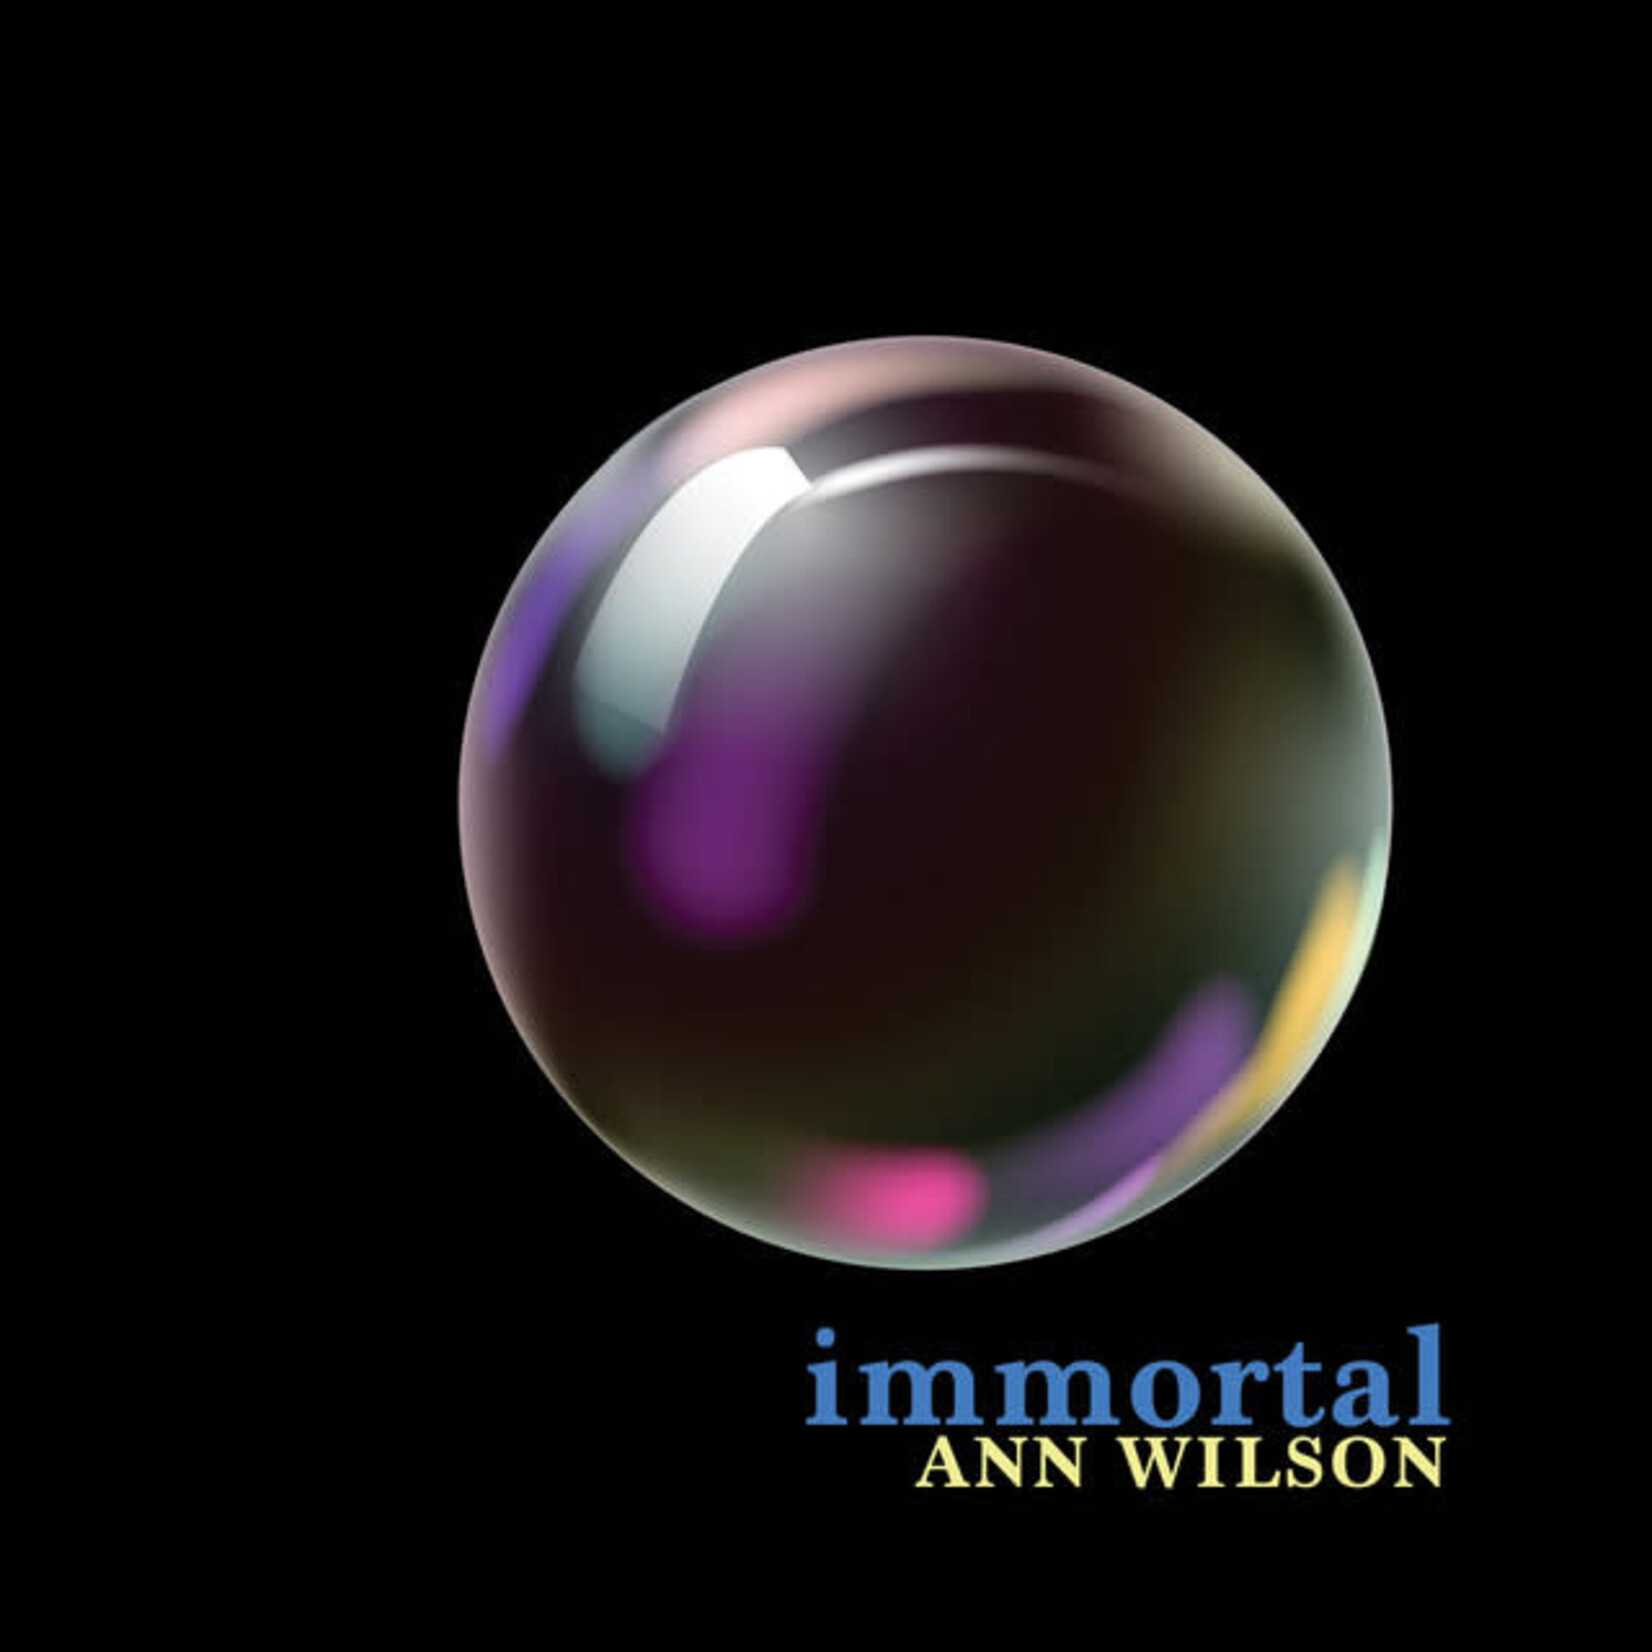 Ann Wilson - Immortal [CD]